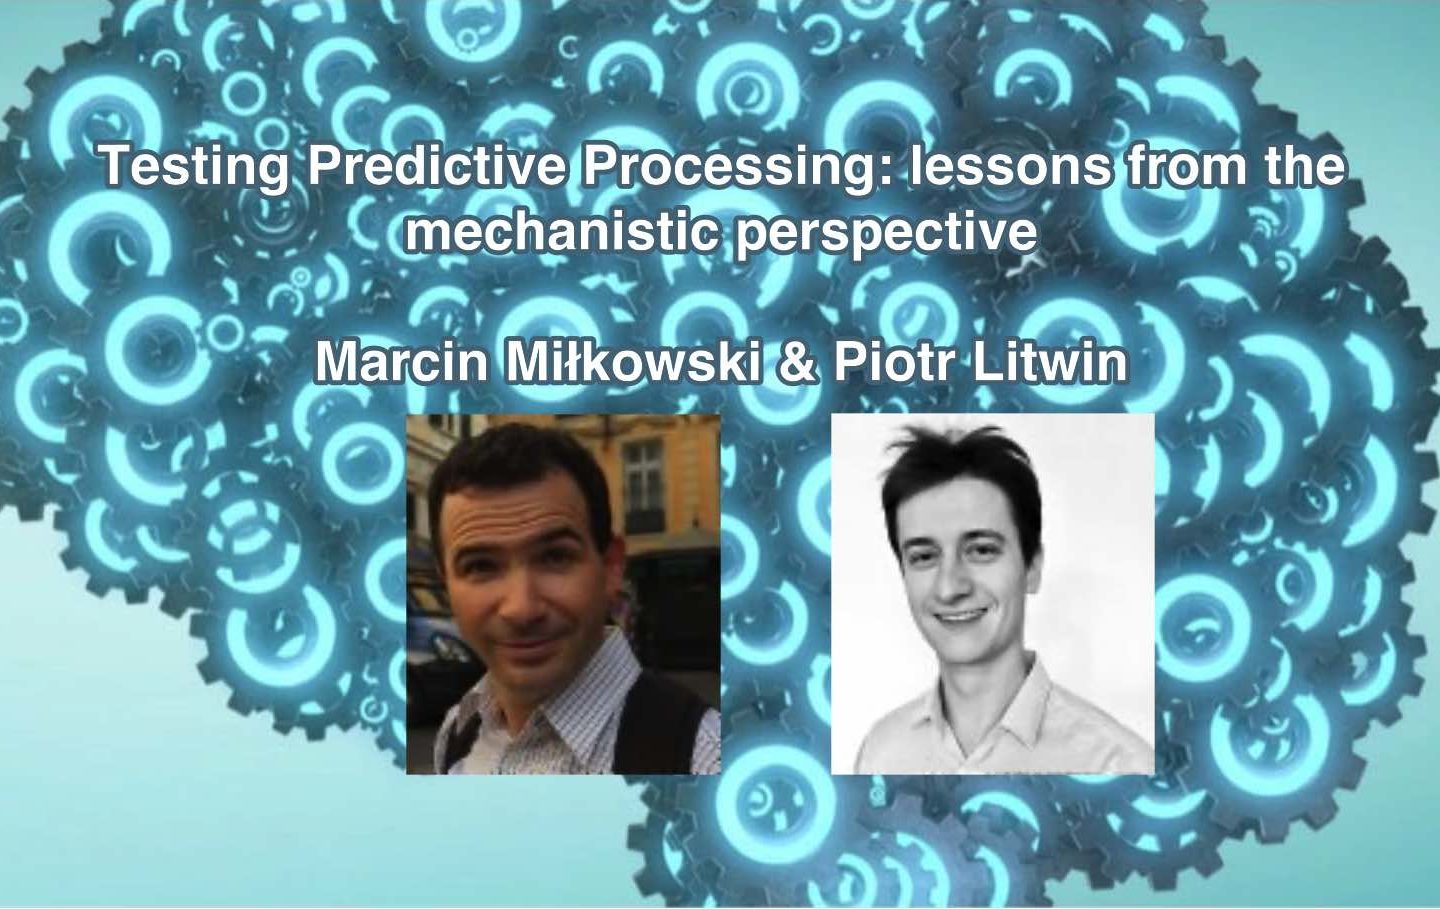 Marcin Miłkowski’s & Piotr Litwin’s livestream of “Testing Predictive Processing”